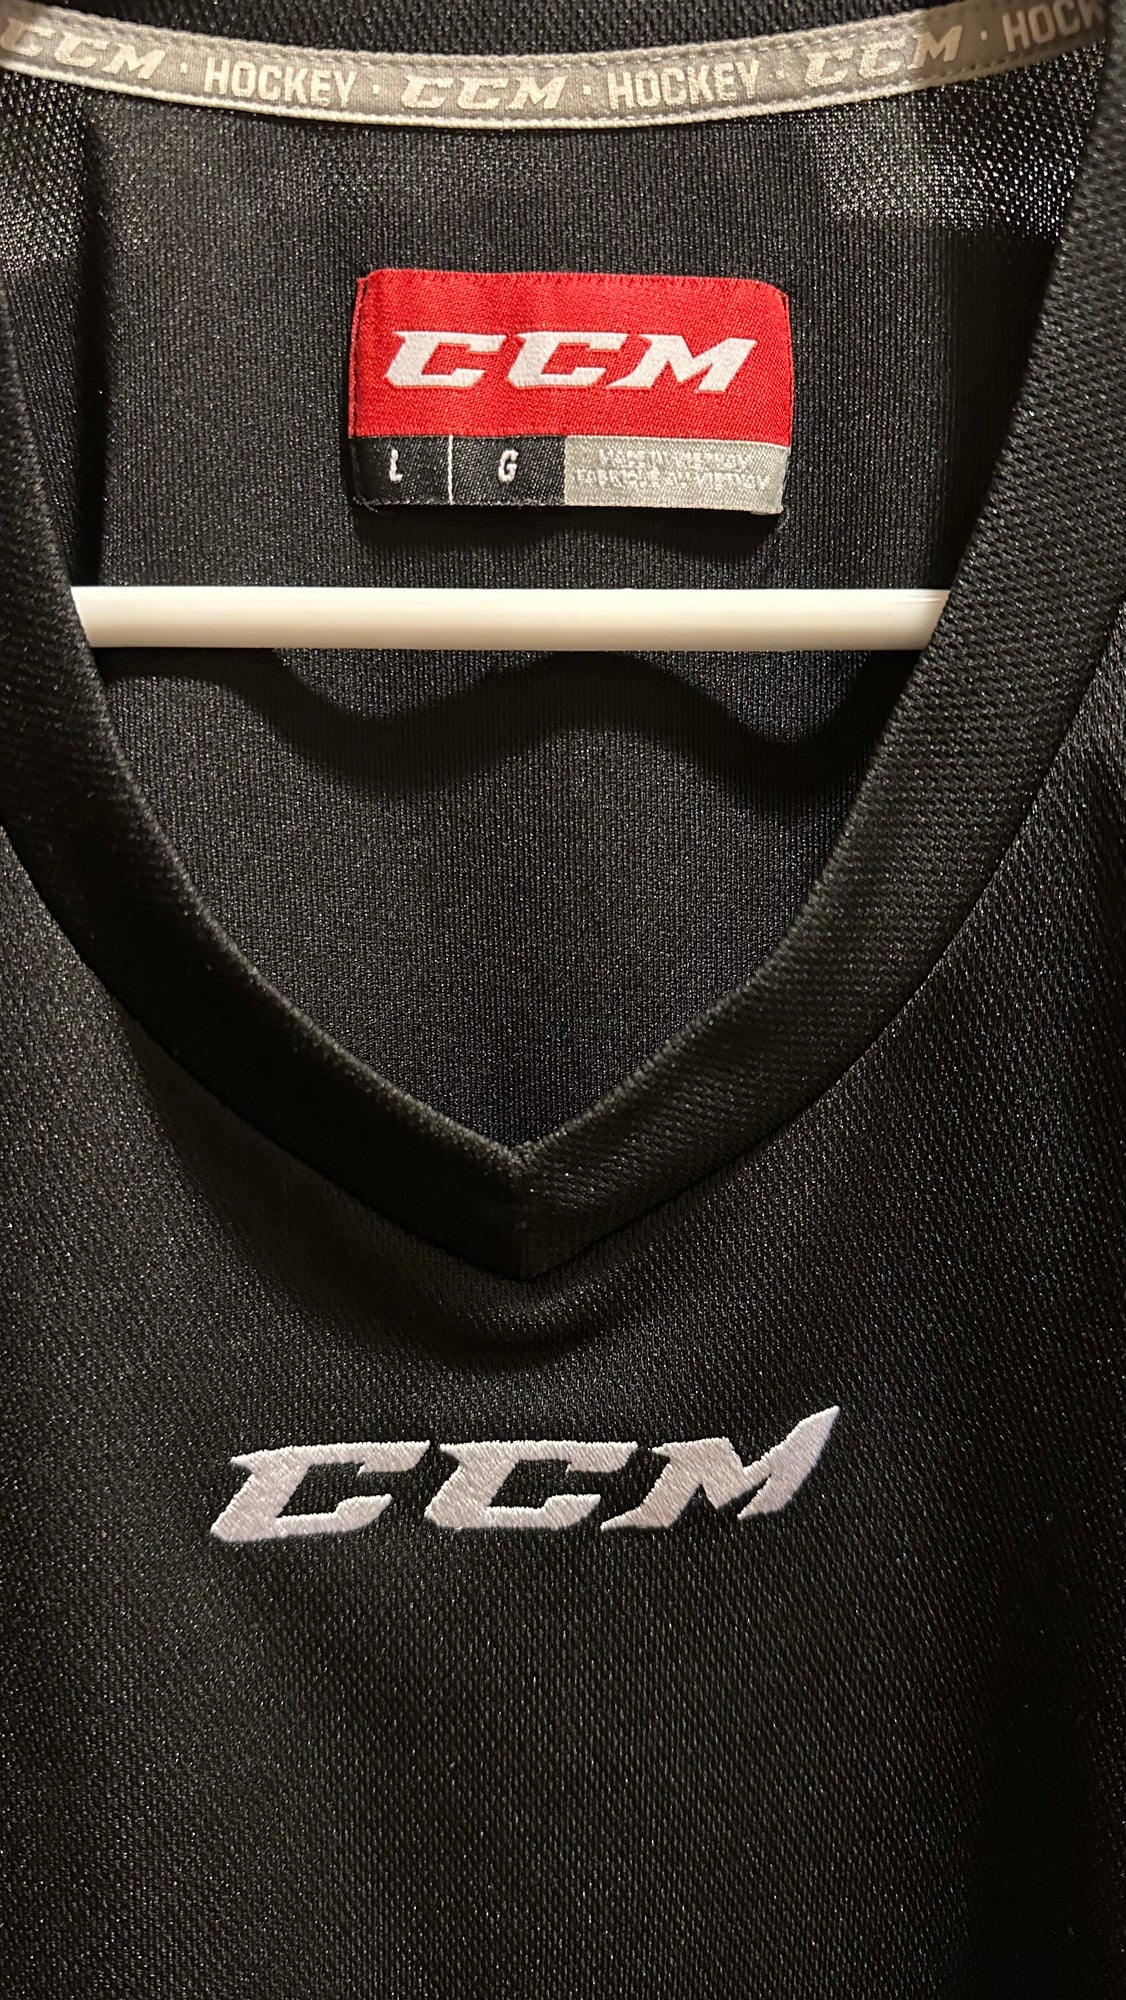 CCM 5000 Practice Jersey Hockey - Orange - Senior - Large